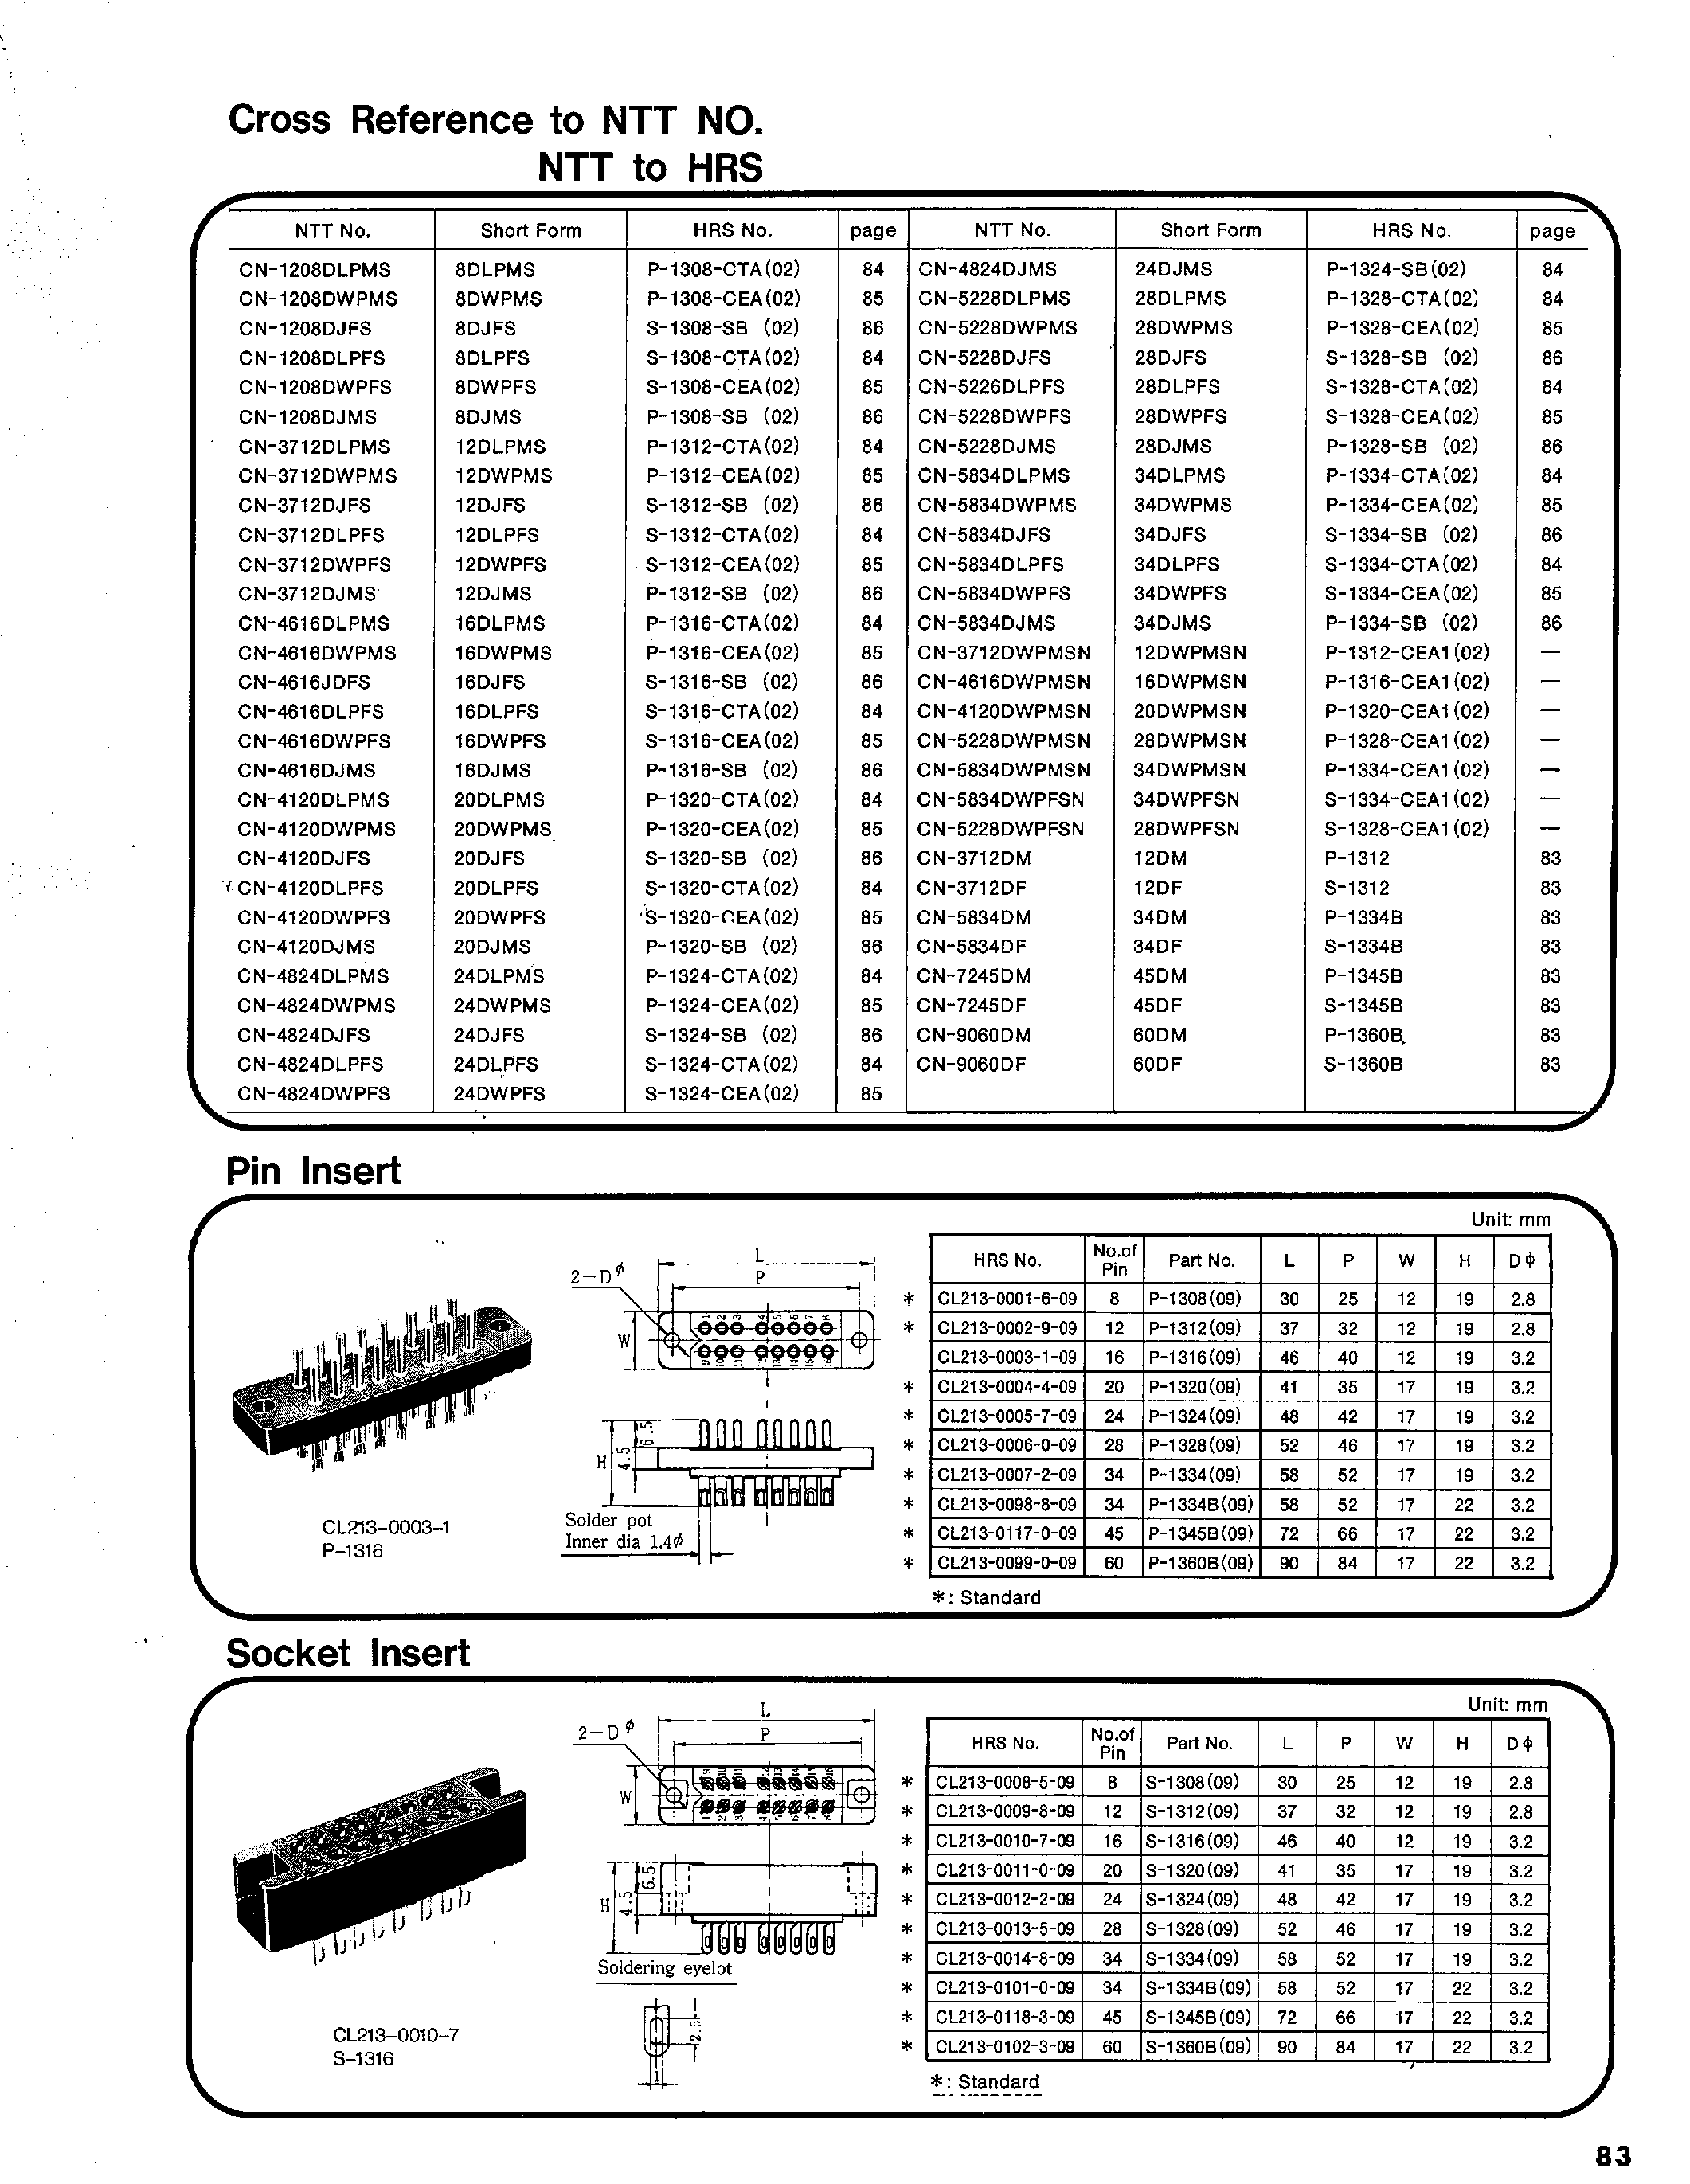 Datasheet P-1345W-CE - 1300 SERIES RECTANGULAR CONNECTORS page 2